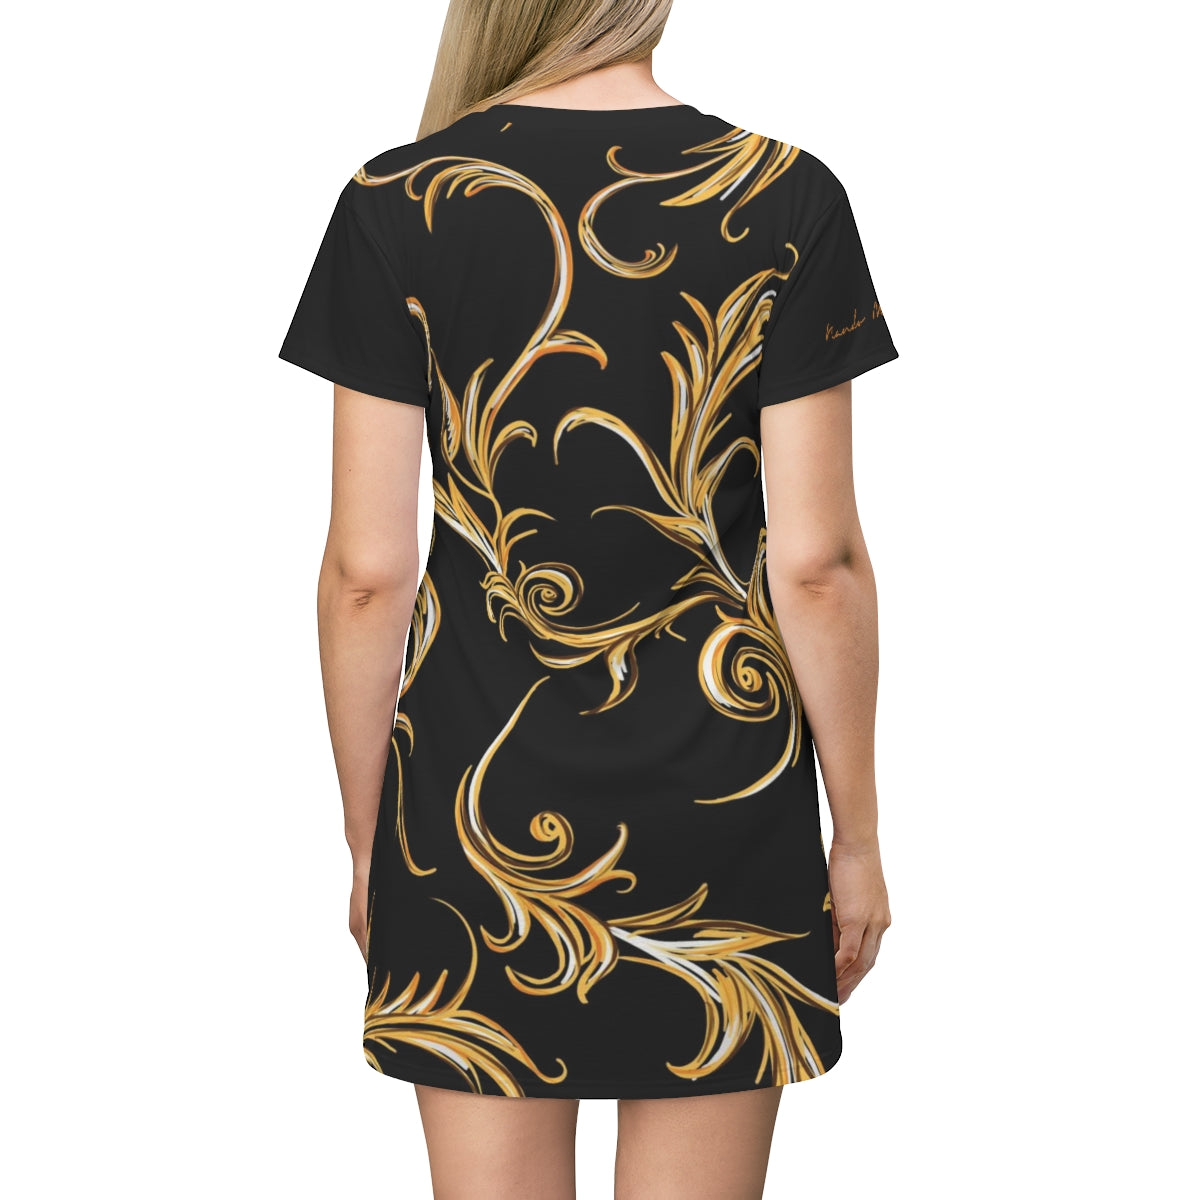 Shirtdress, Gold Barroco Style